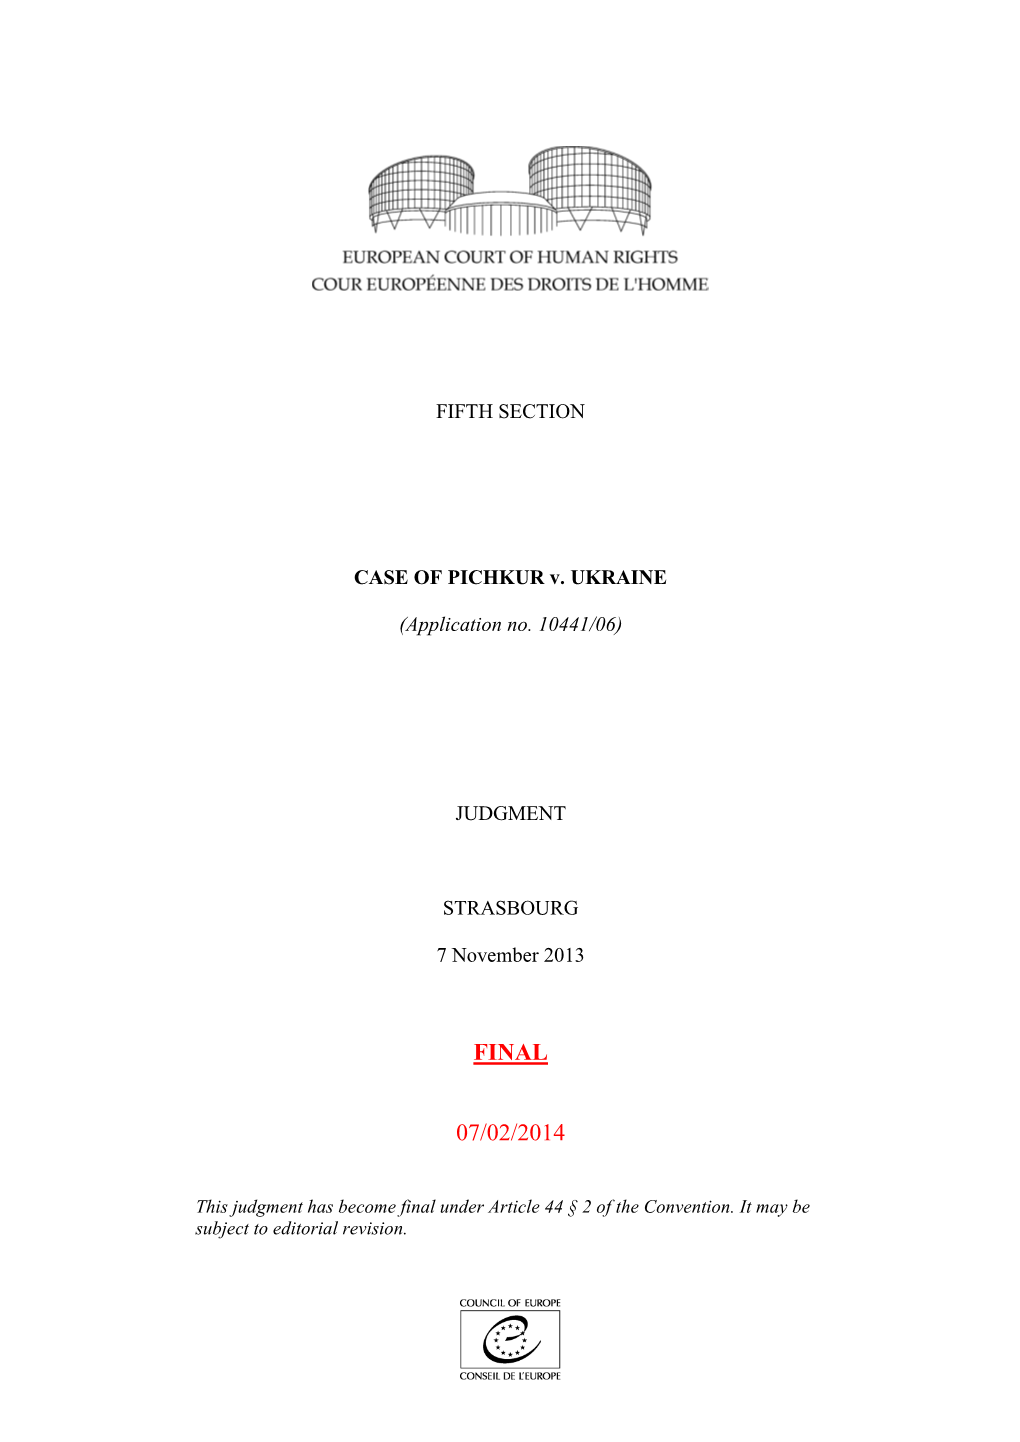 FIFTH SECTION CASE of PICHKUR V. UKRAINE (Application No. 10441